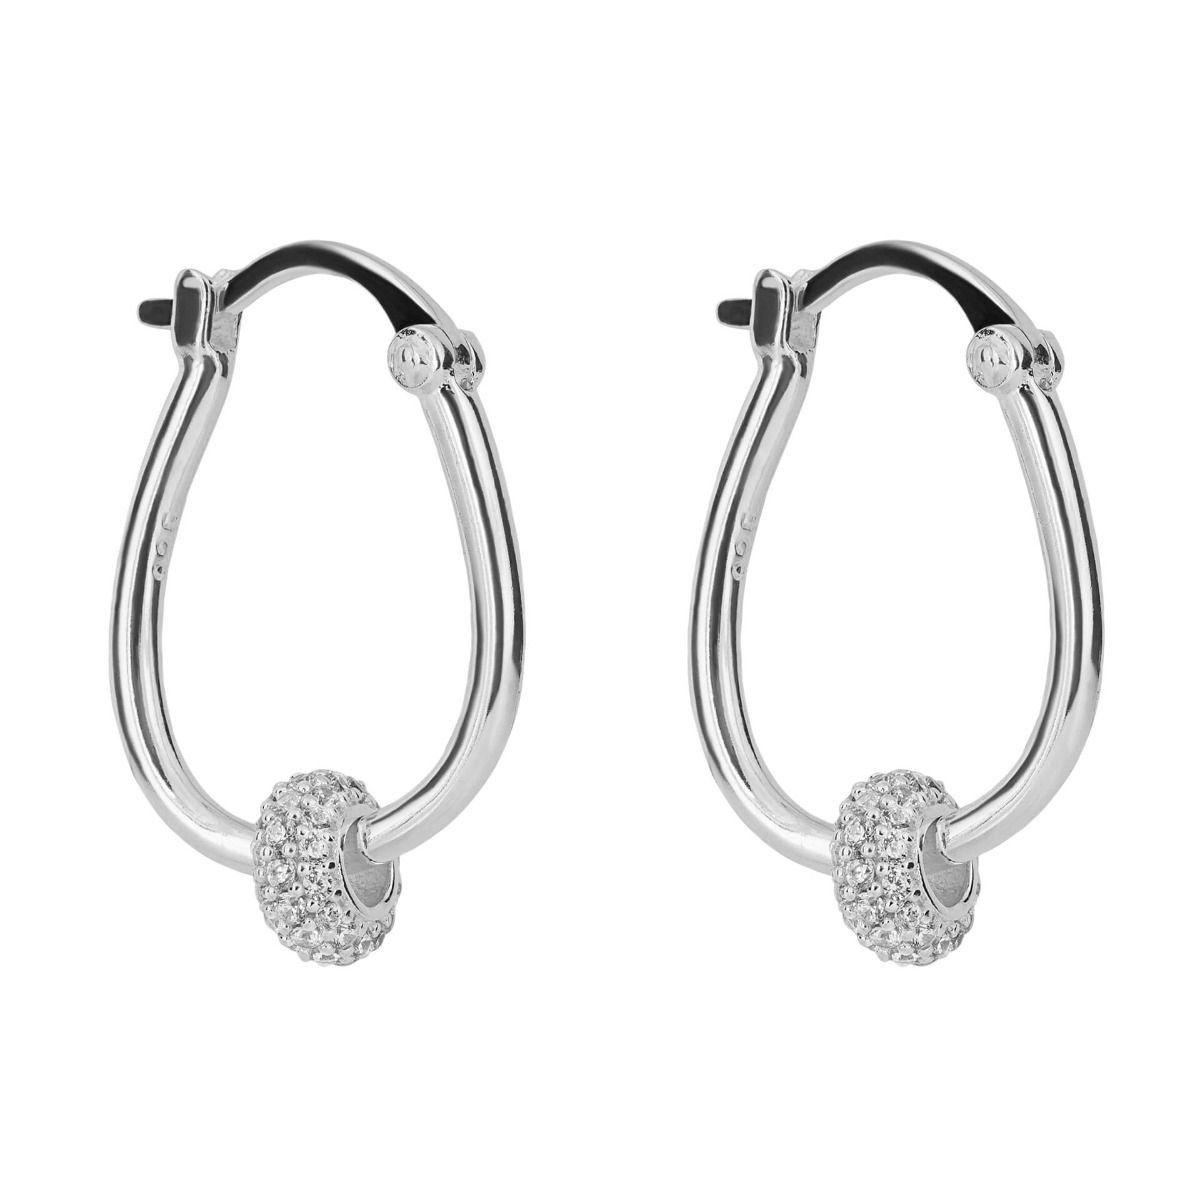 Fiorelli silver and cubic zirconia hoop earrings